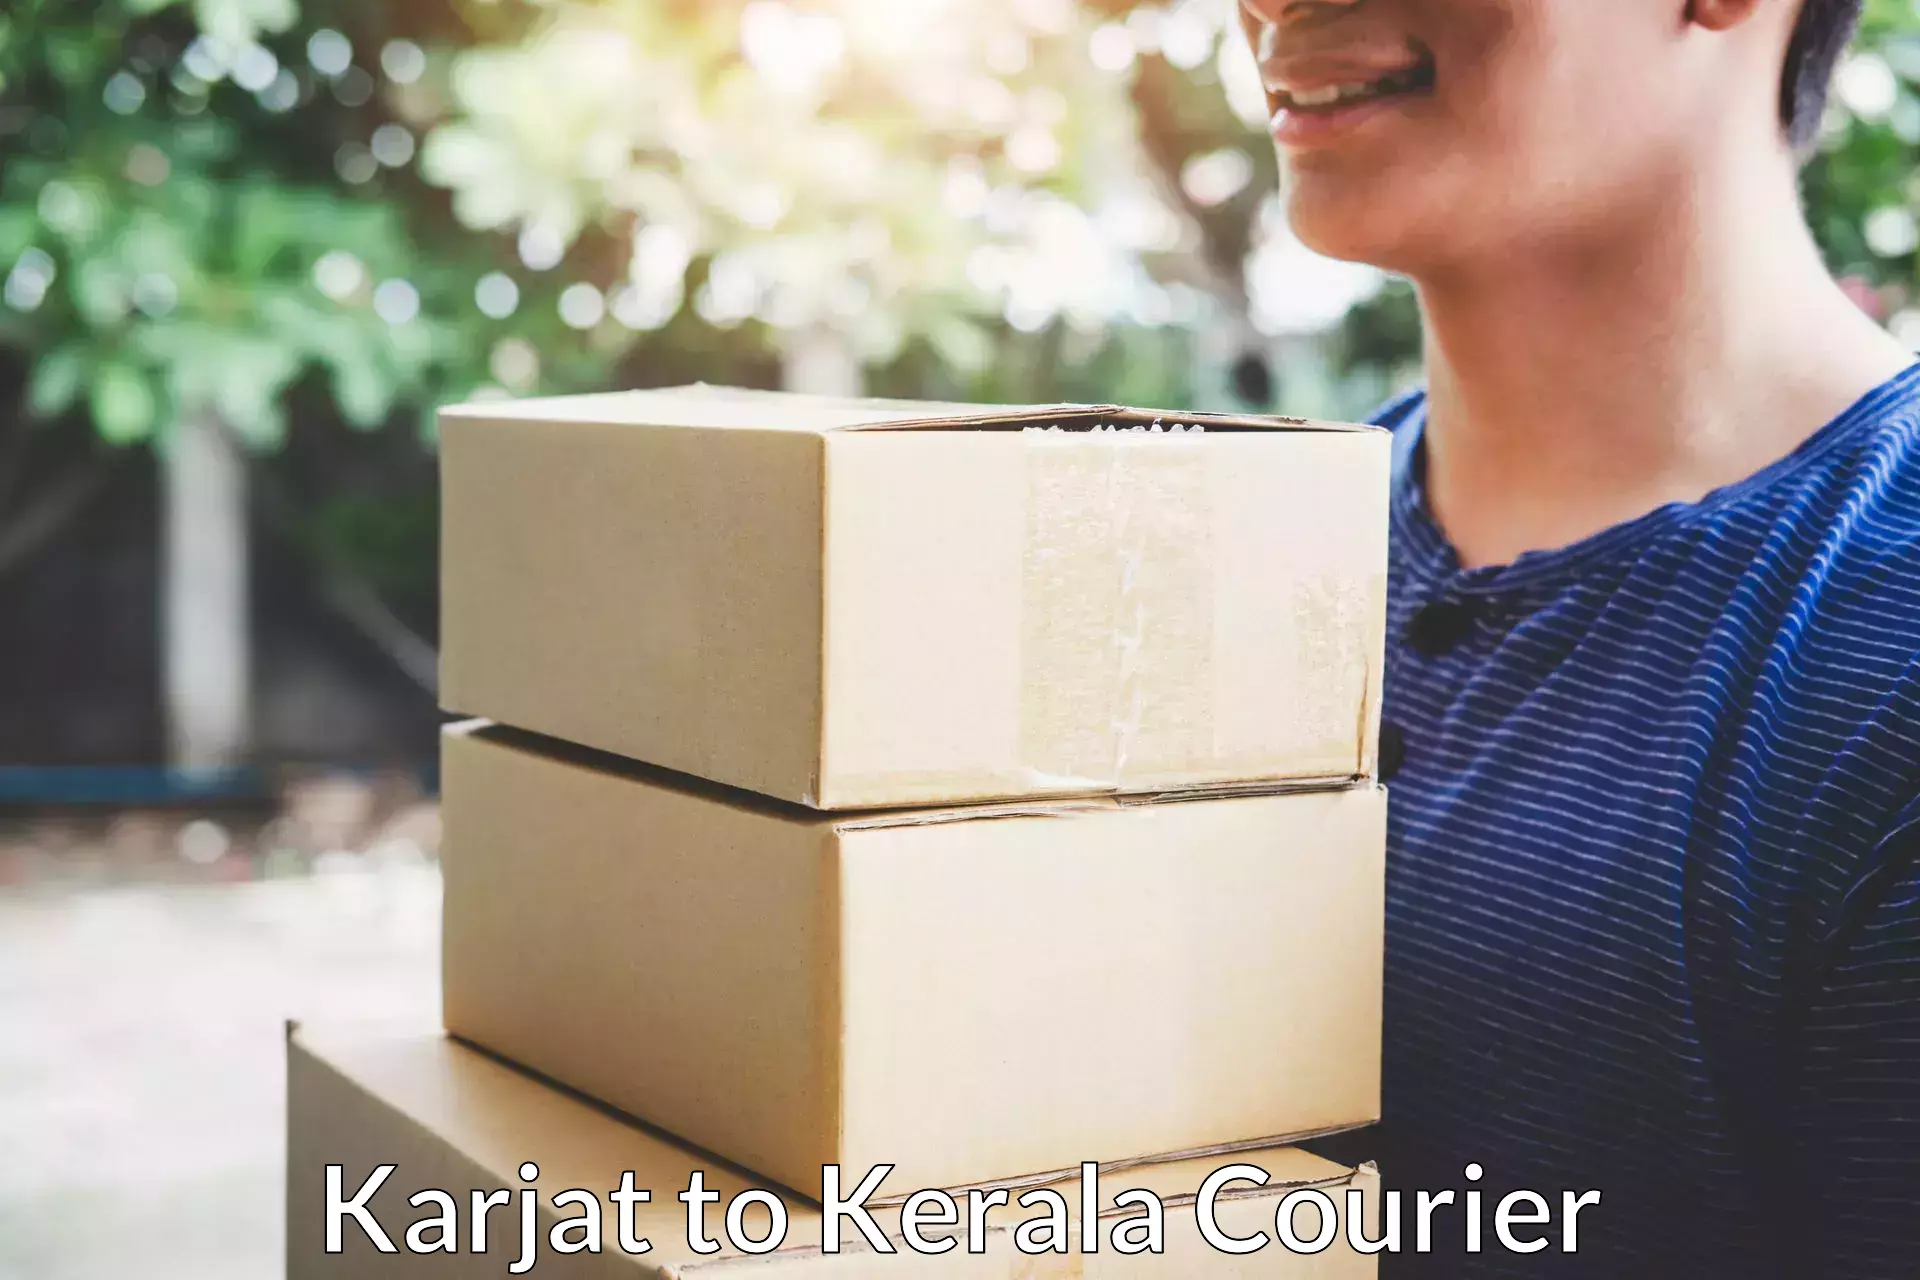 Furniture relocation experts Karjat to Kerala